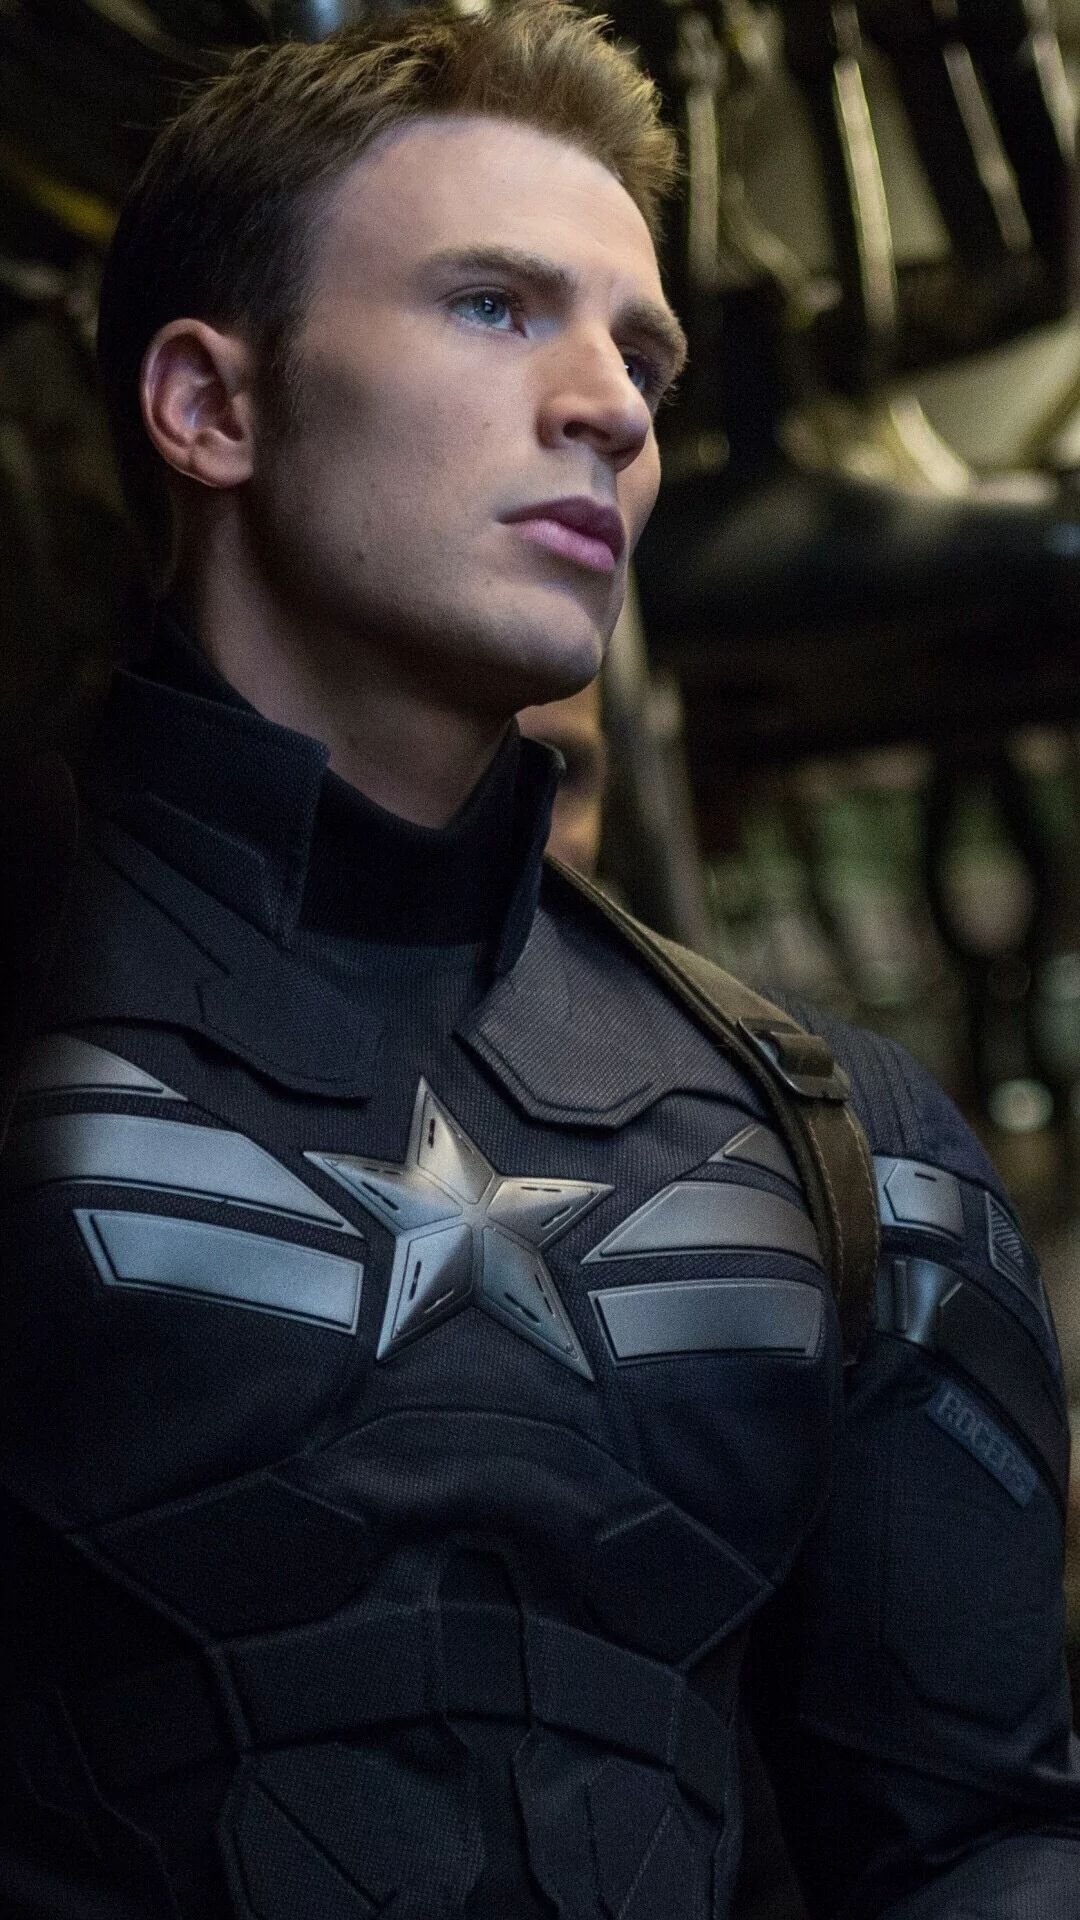 Captain America 4K Wallpaper For Android. Chris evans captain america, Chris evans tumblr, Chris evans